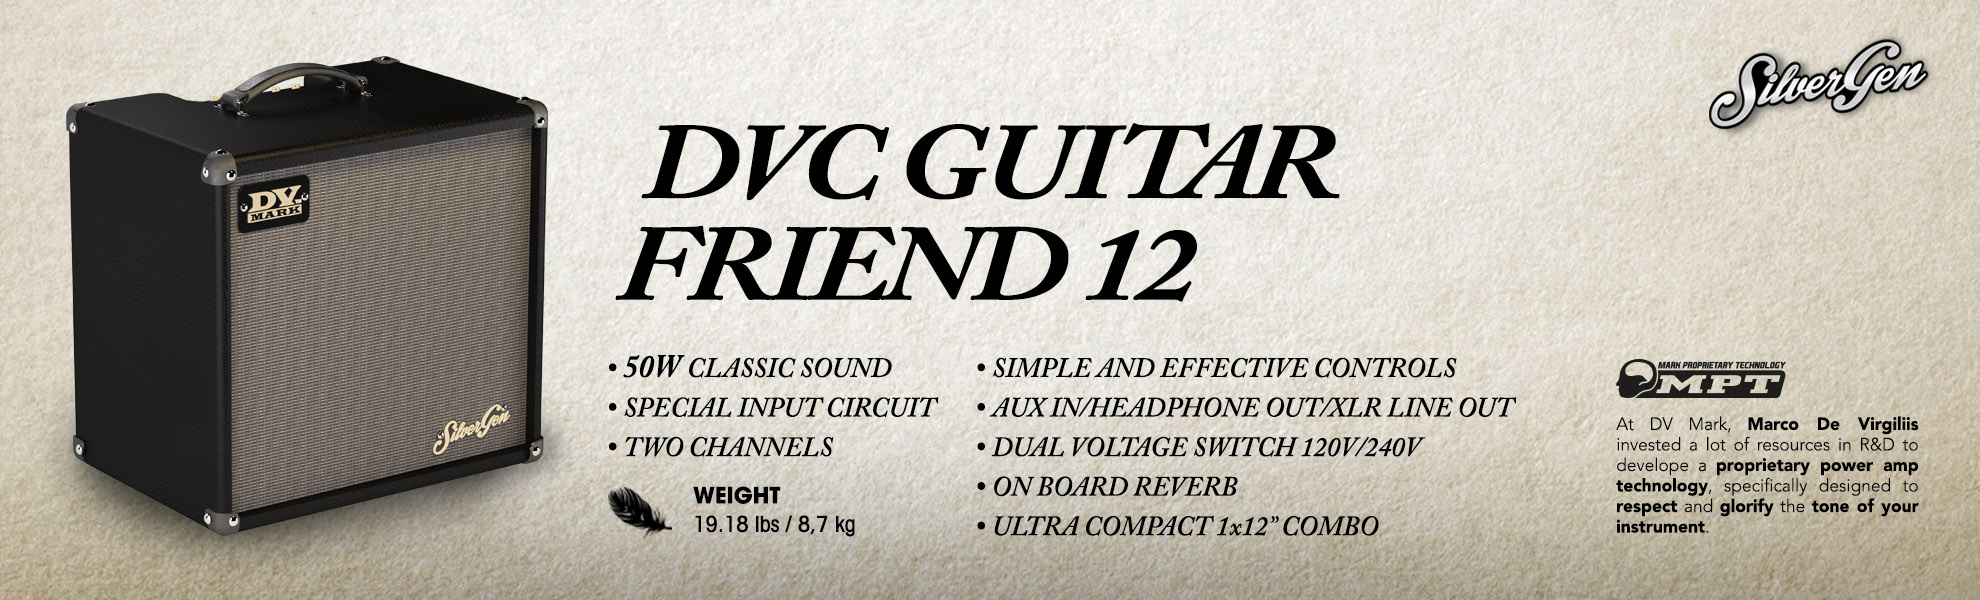 DV Mark DCV Guitar Friend 12, gitarsko pojačalo